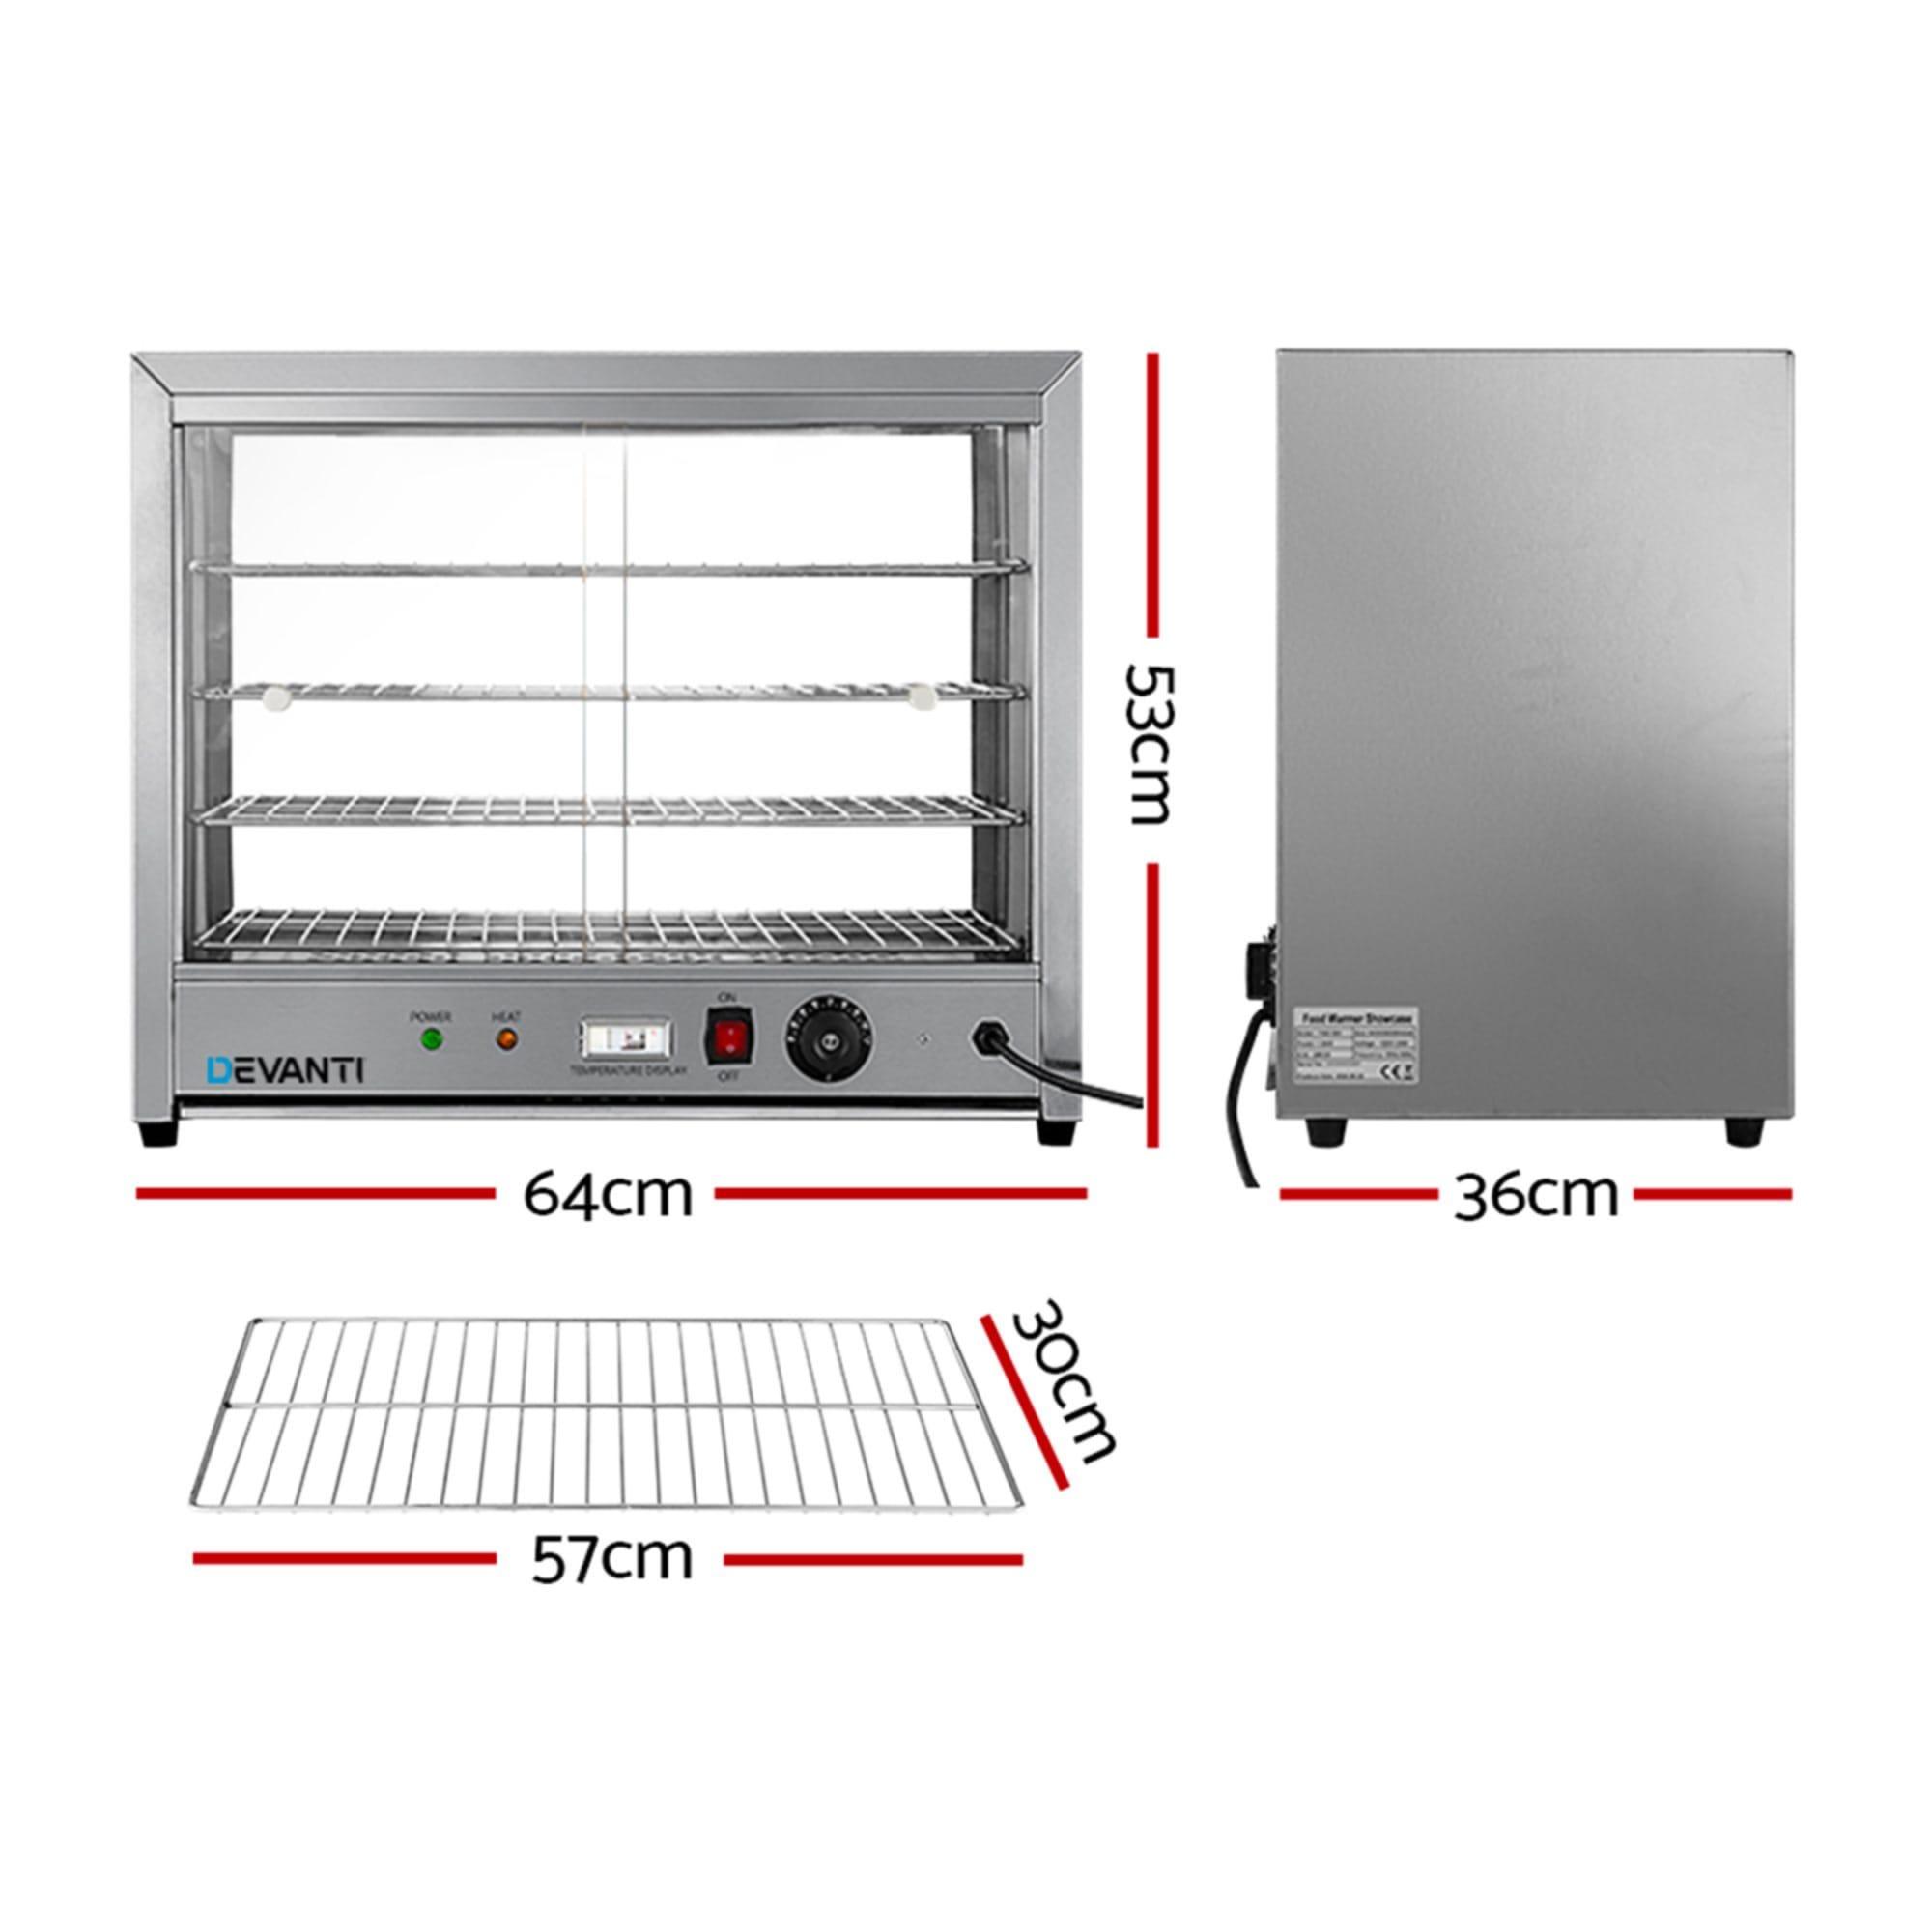 Devanti 4 Tier Commercial Food Warmer Display Cabinet Image 4